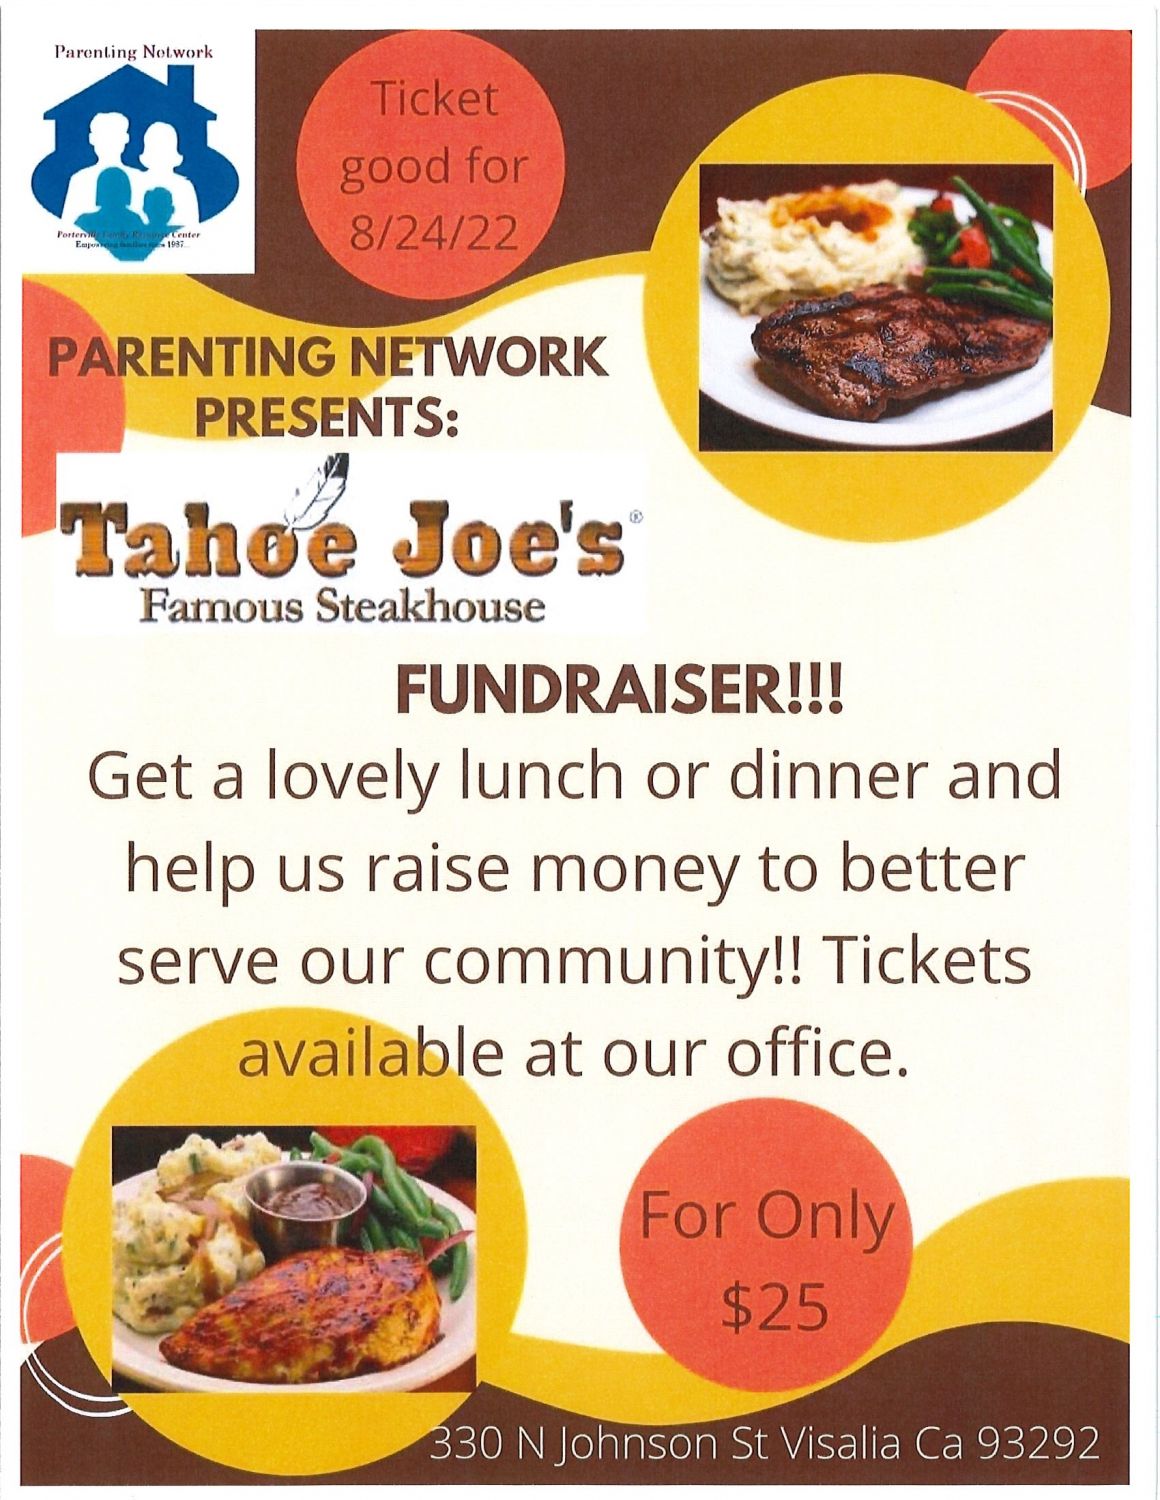 Parenting Network Fundraiser TAHOE JOES